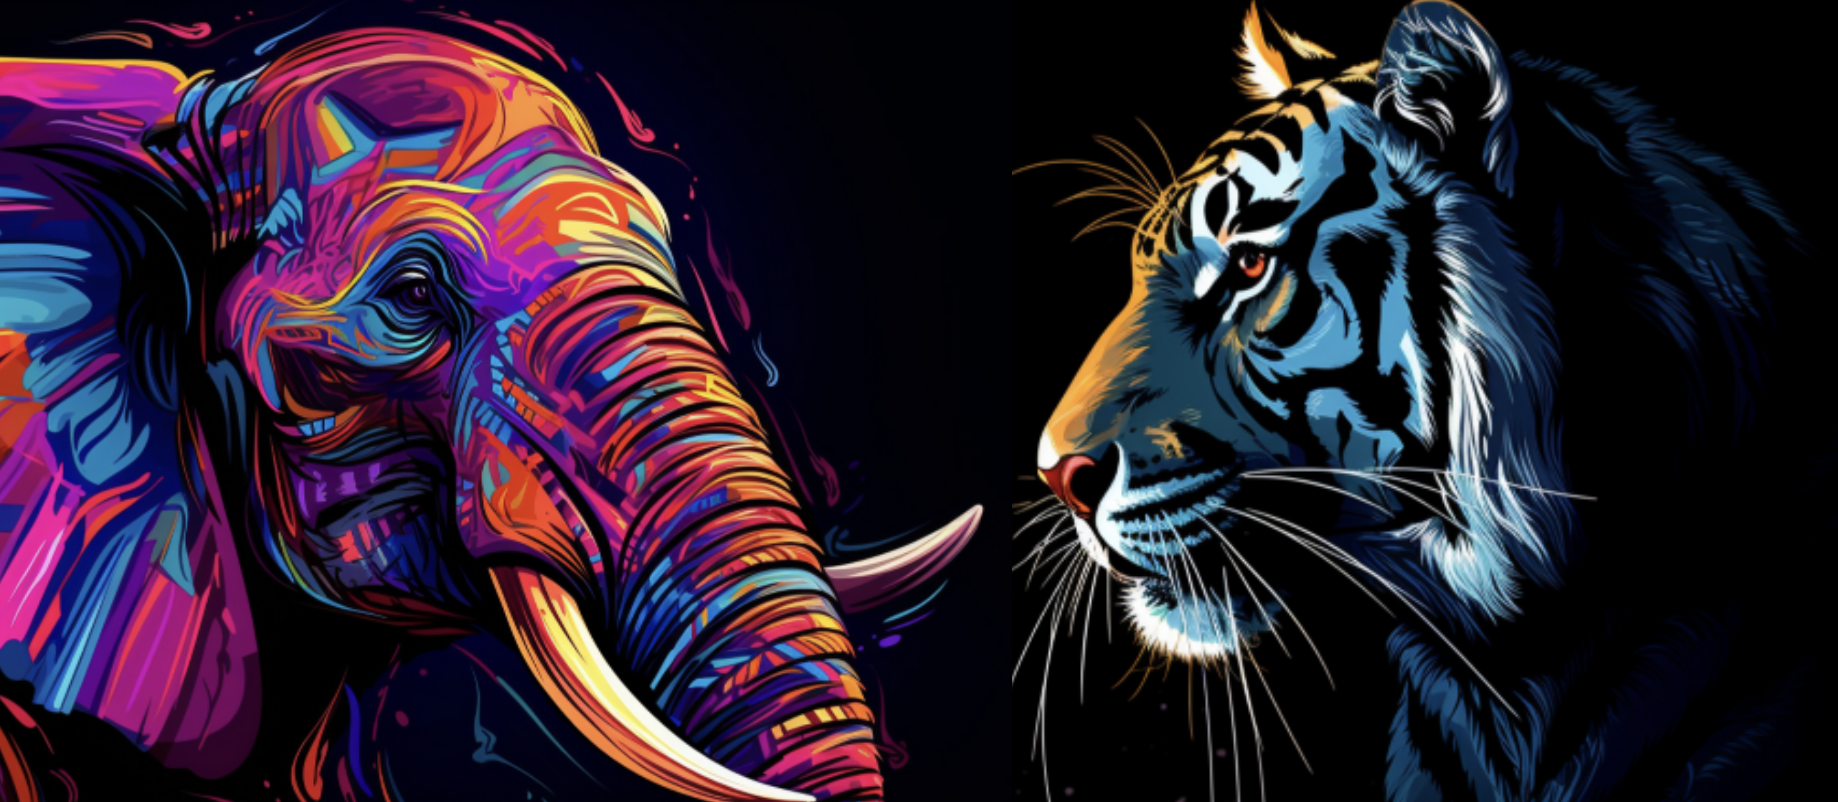 The PostgreSQL elephant vs. the Timescale tiger.